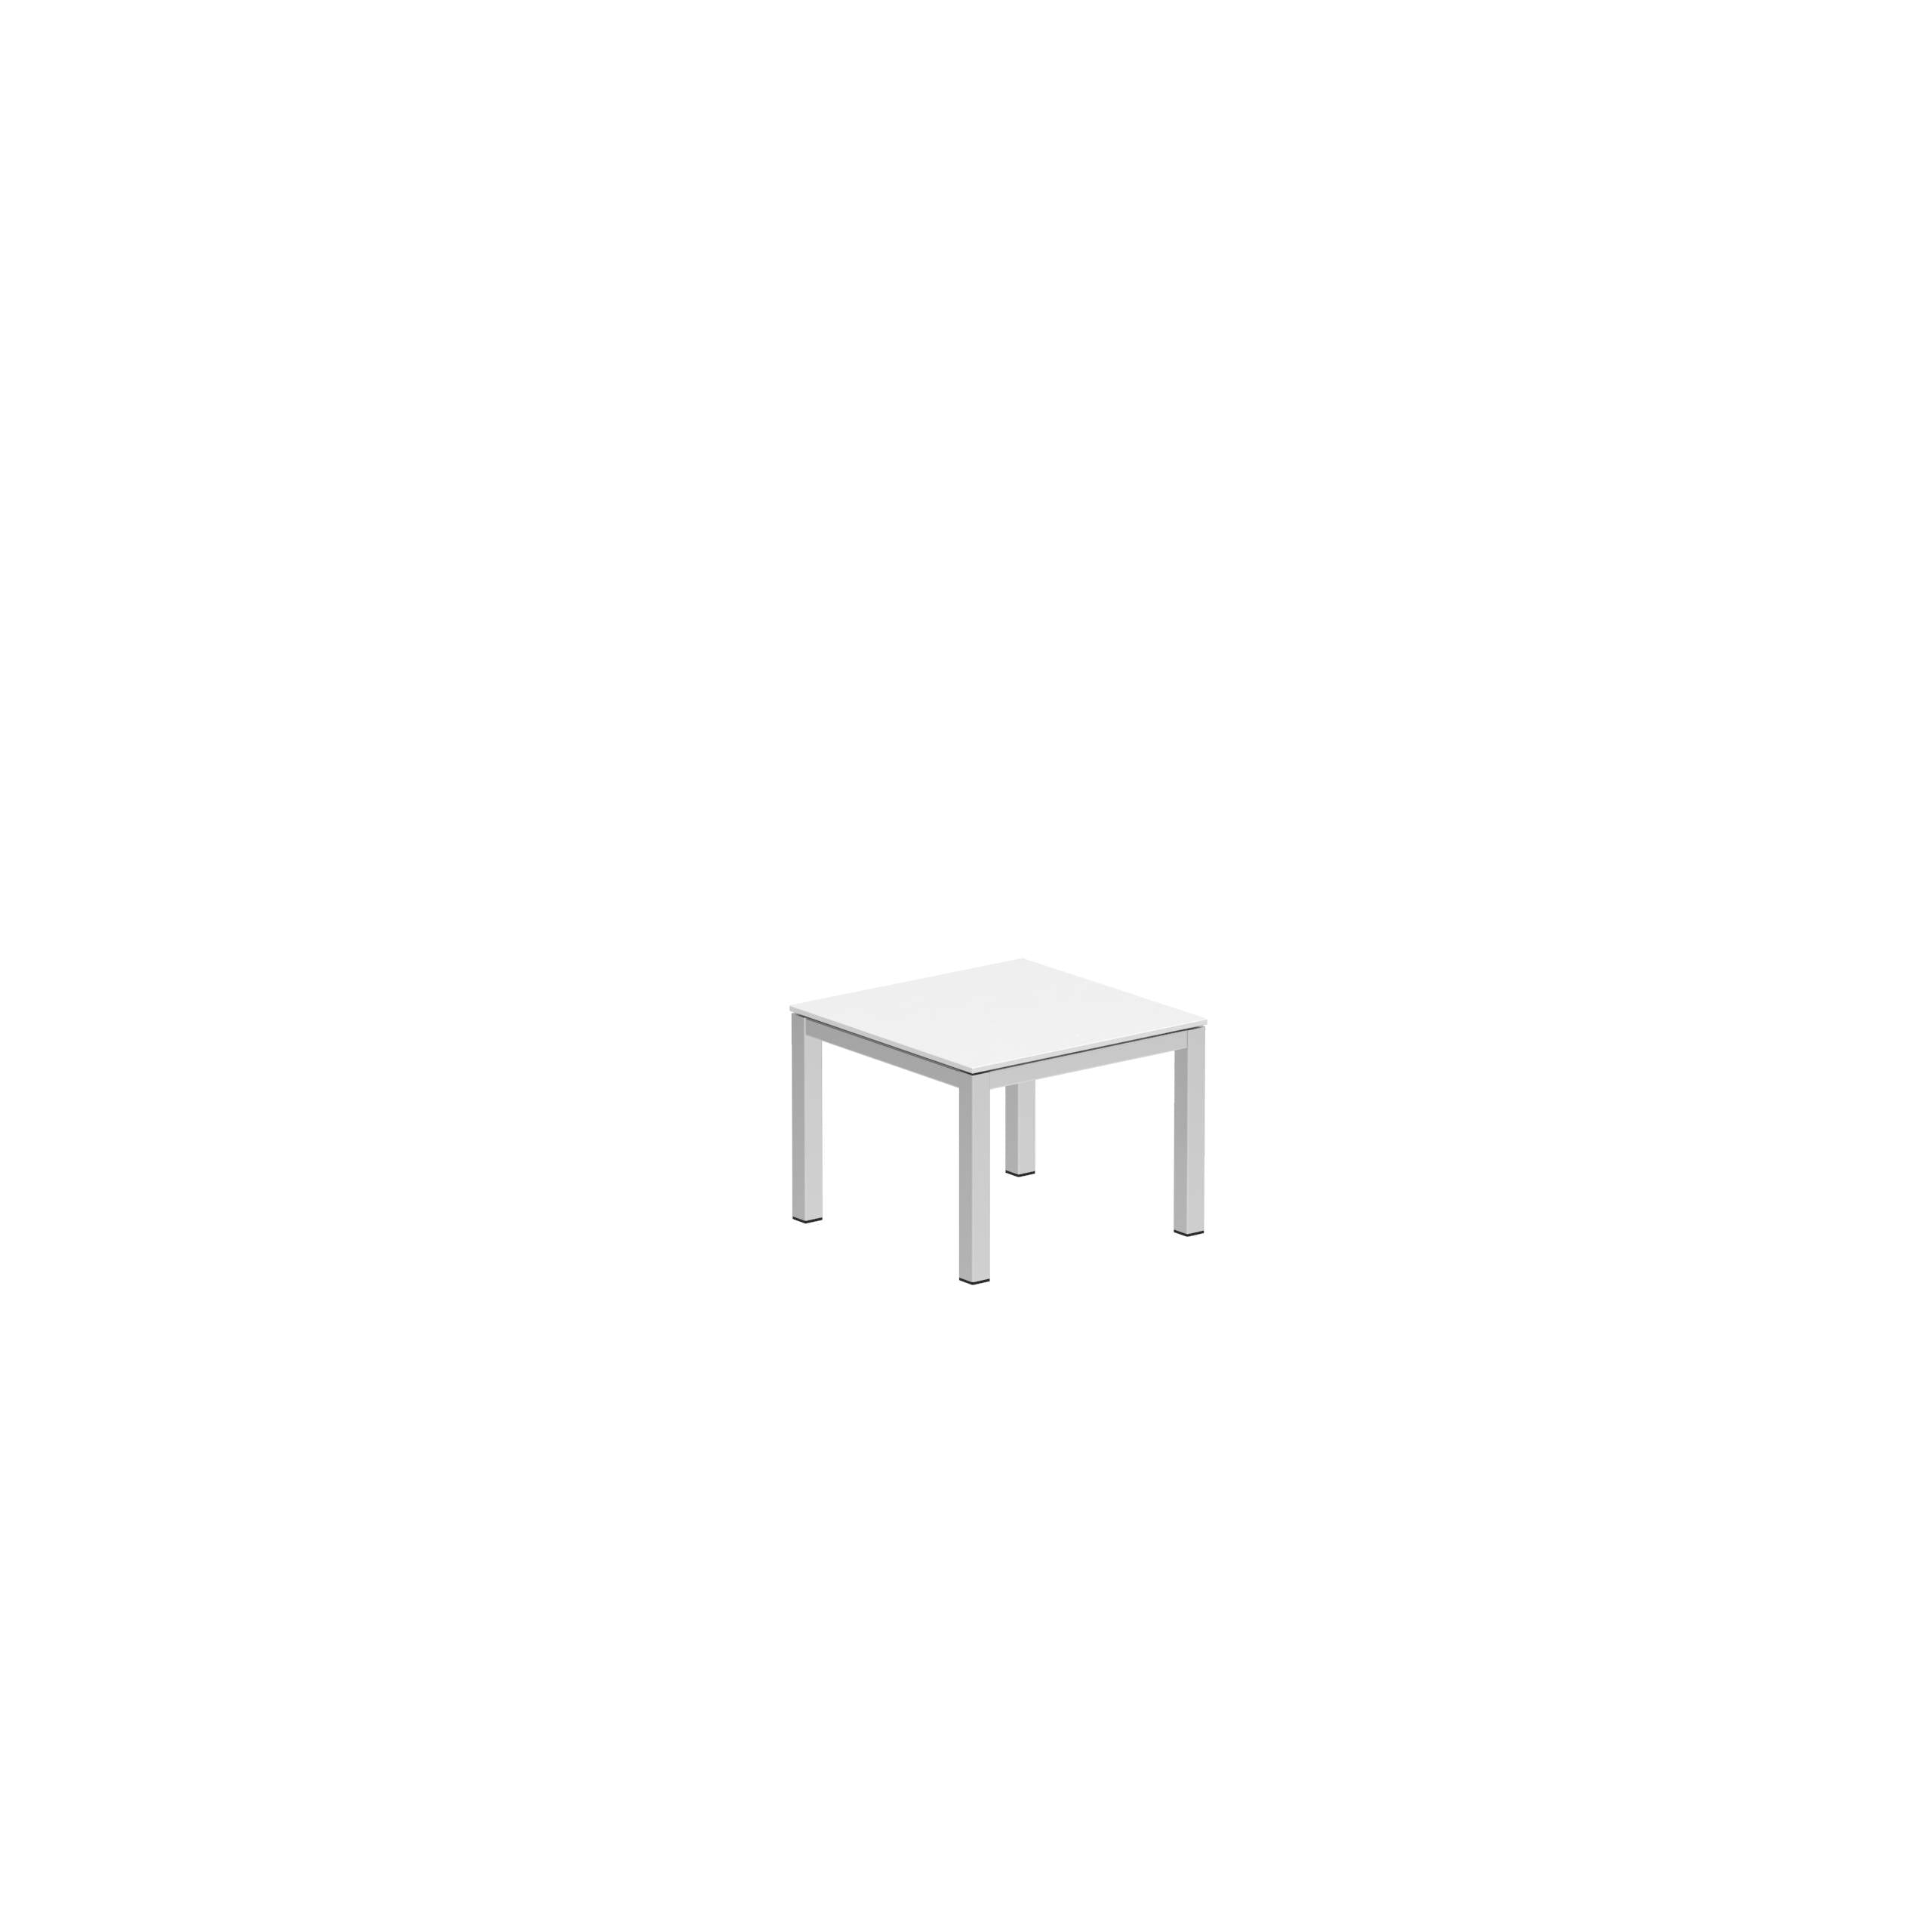 Taboela Table 50x50cm Ep + Ceramic Top White